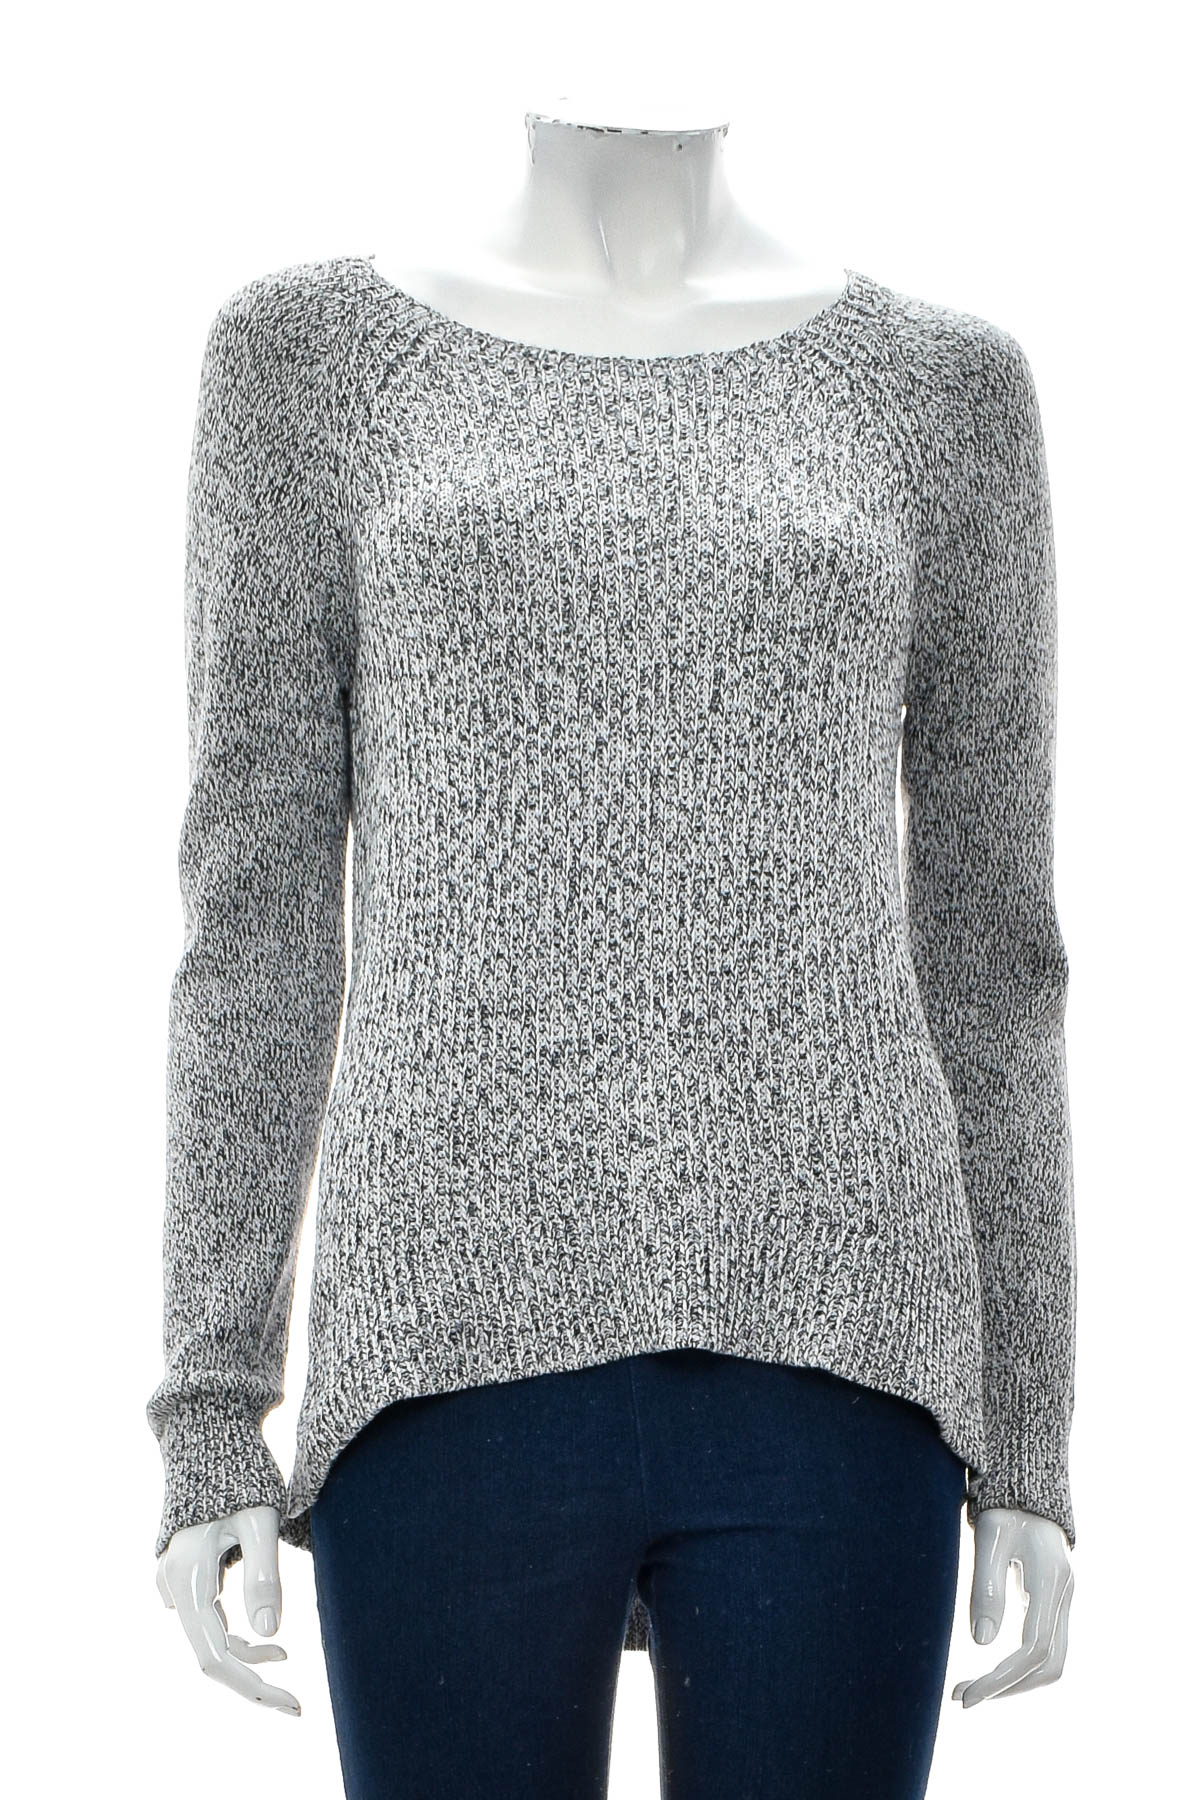 Women's sweater - Ann Taylor - 0